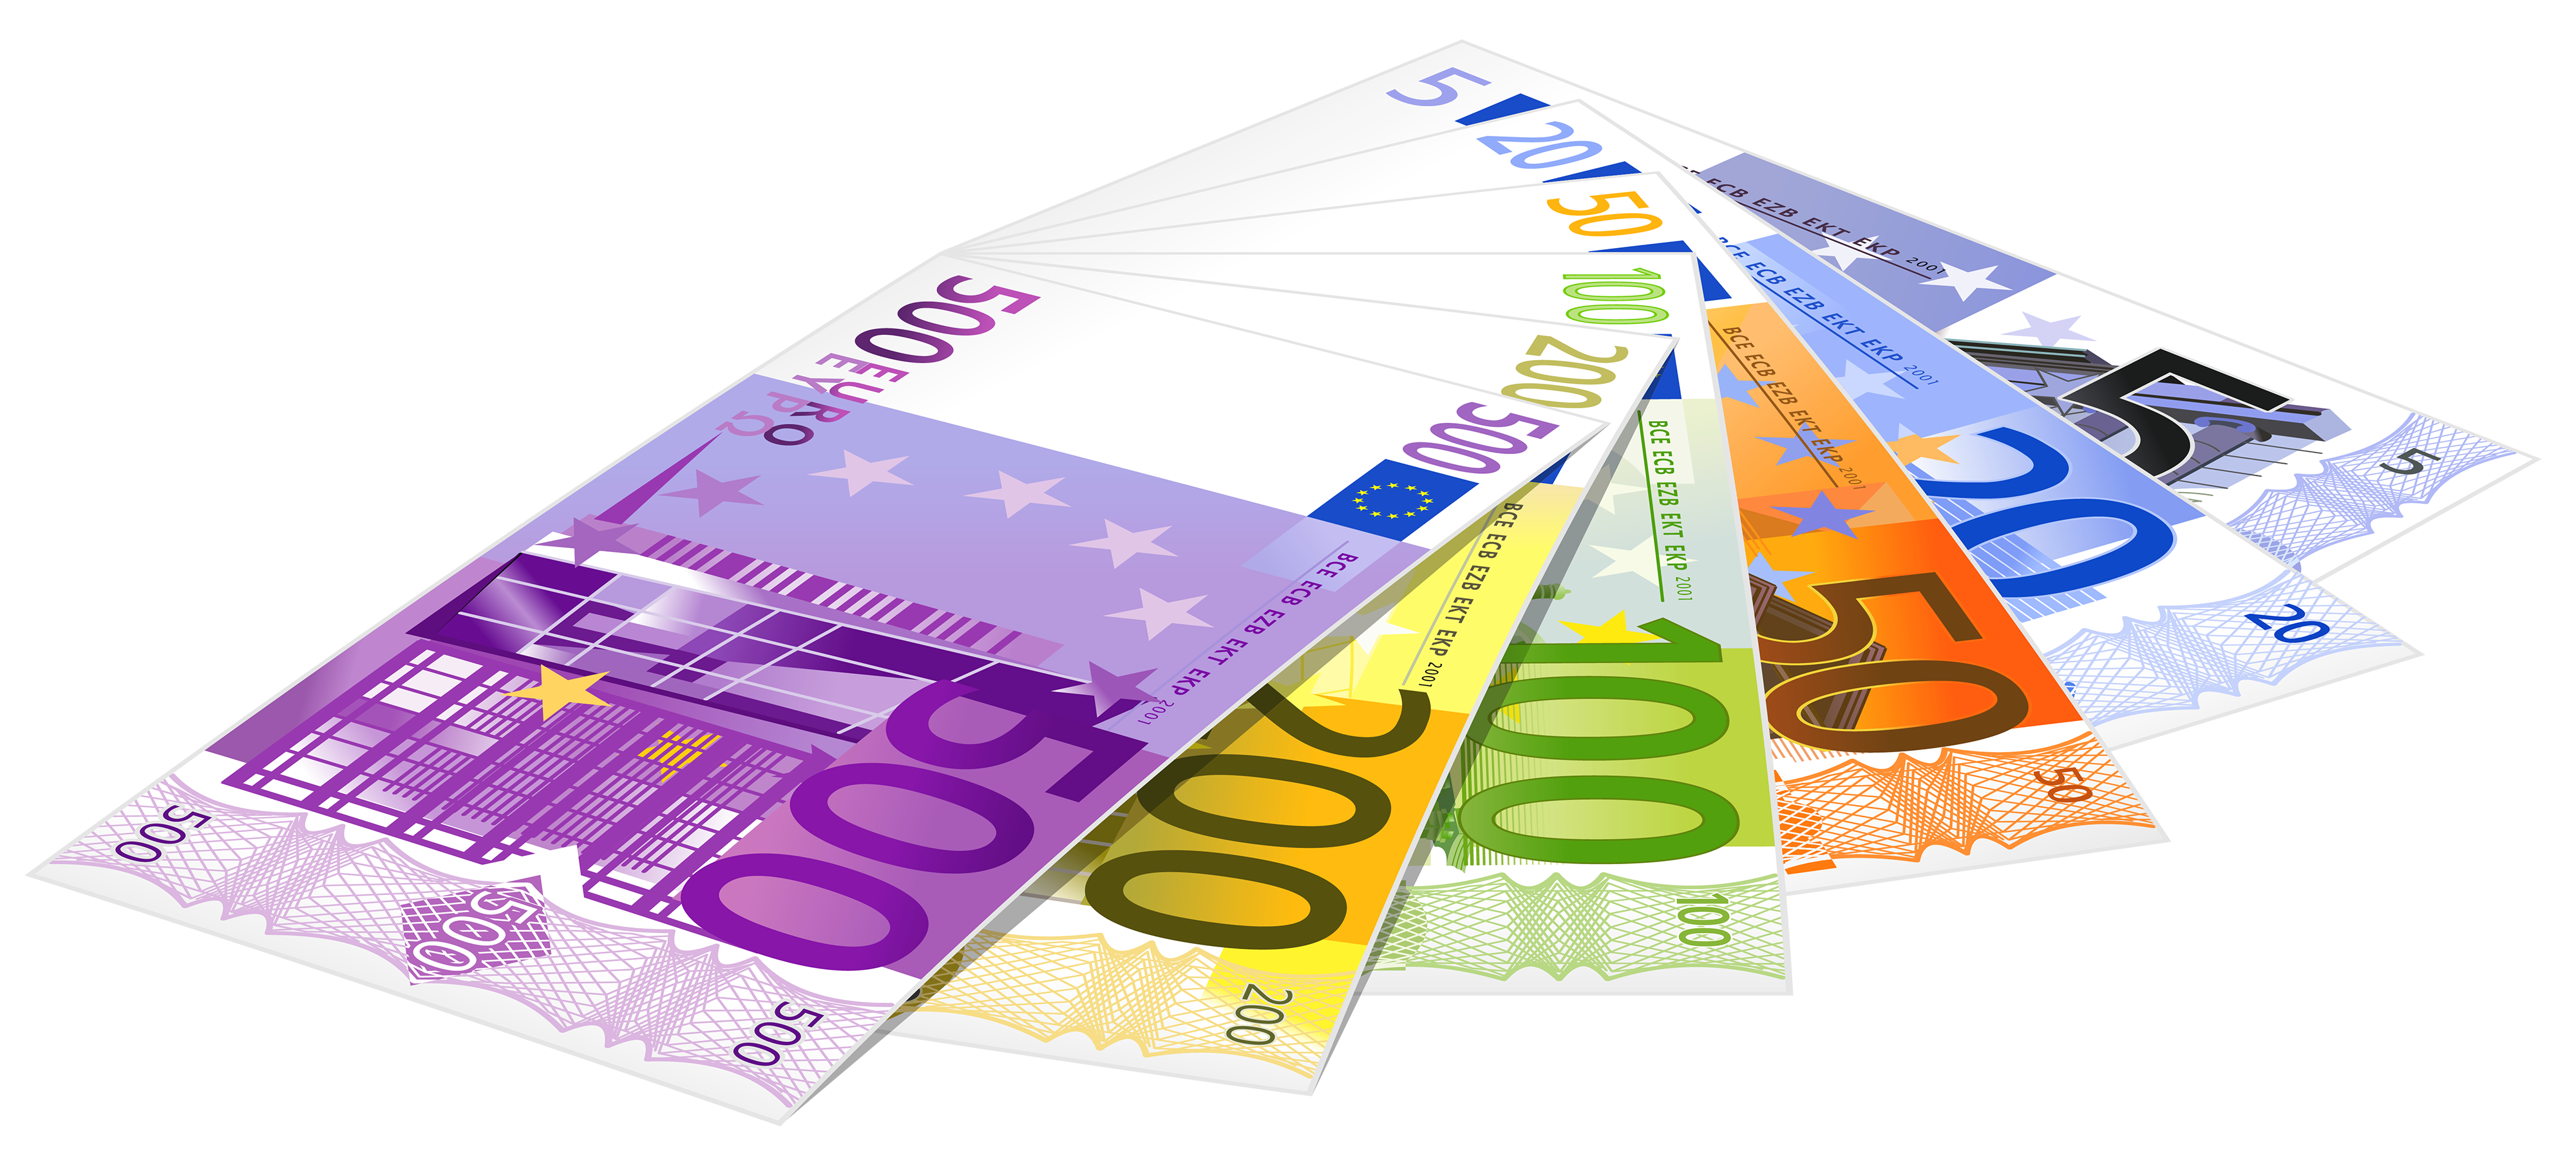 euro clipart free - photo #50